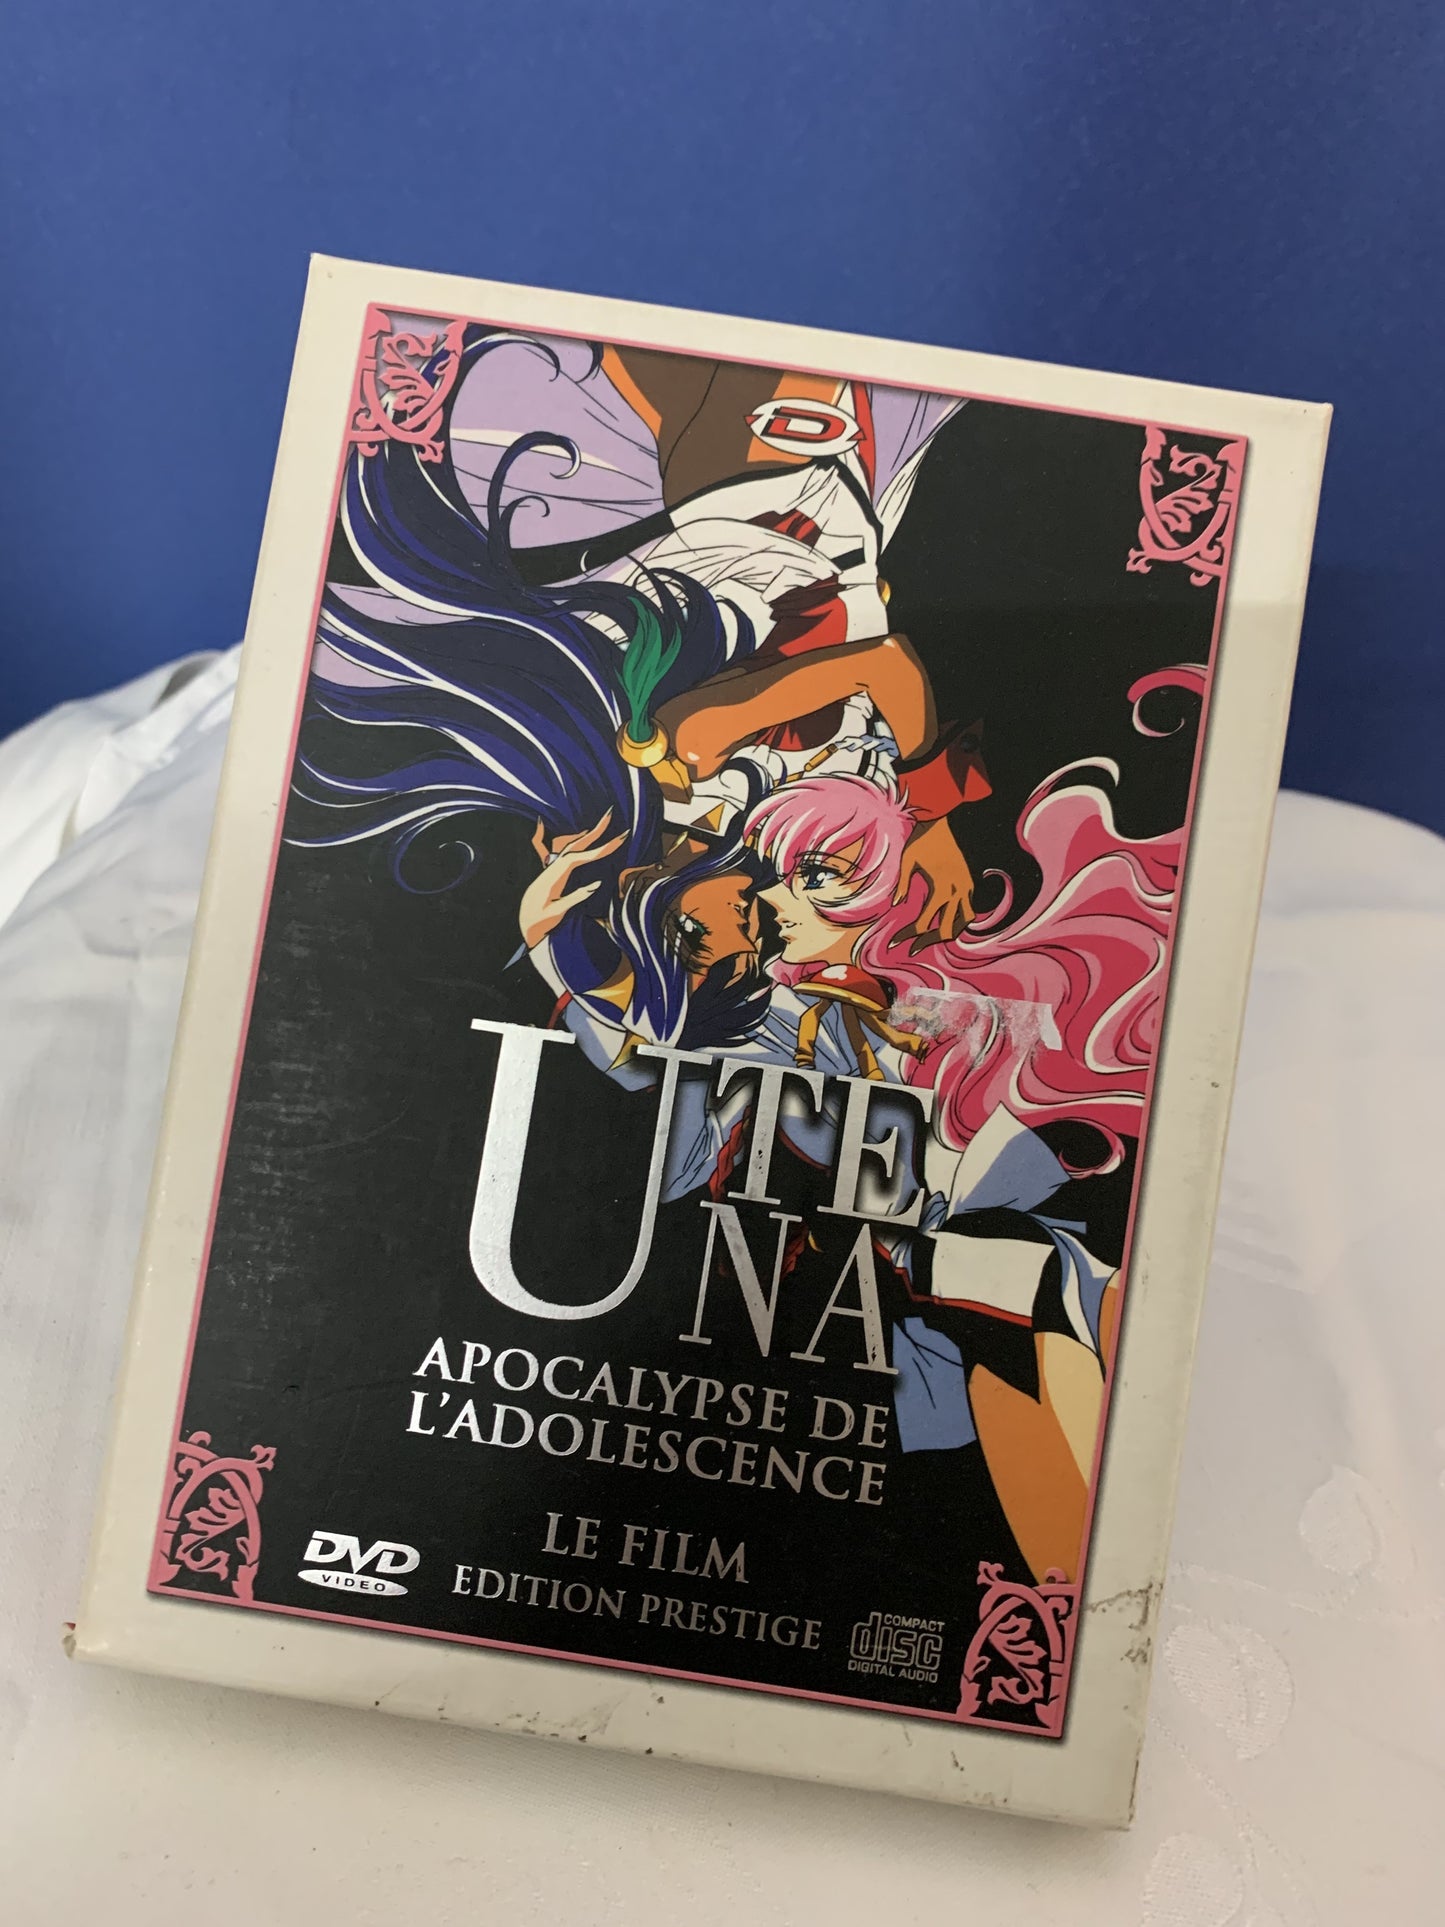 Utena Apocalypse de L'adolescence original DVD